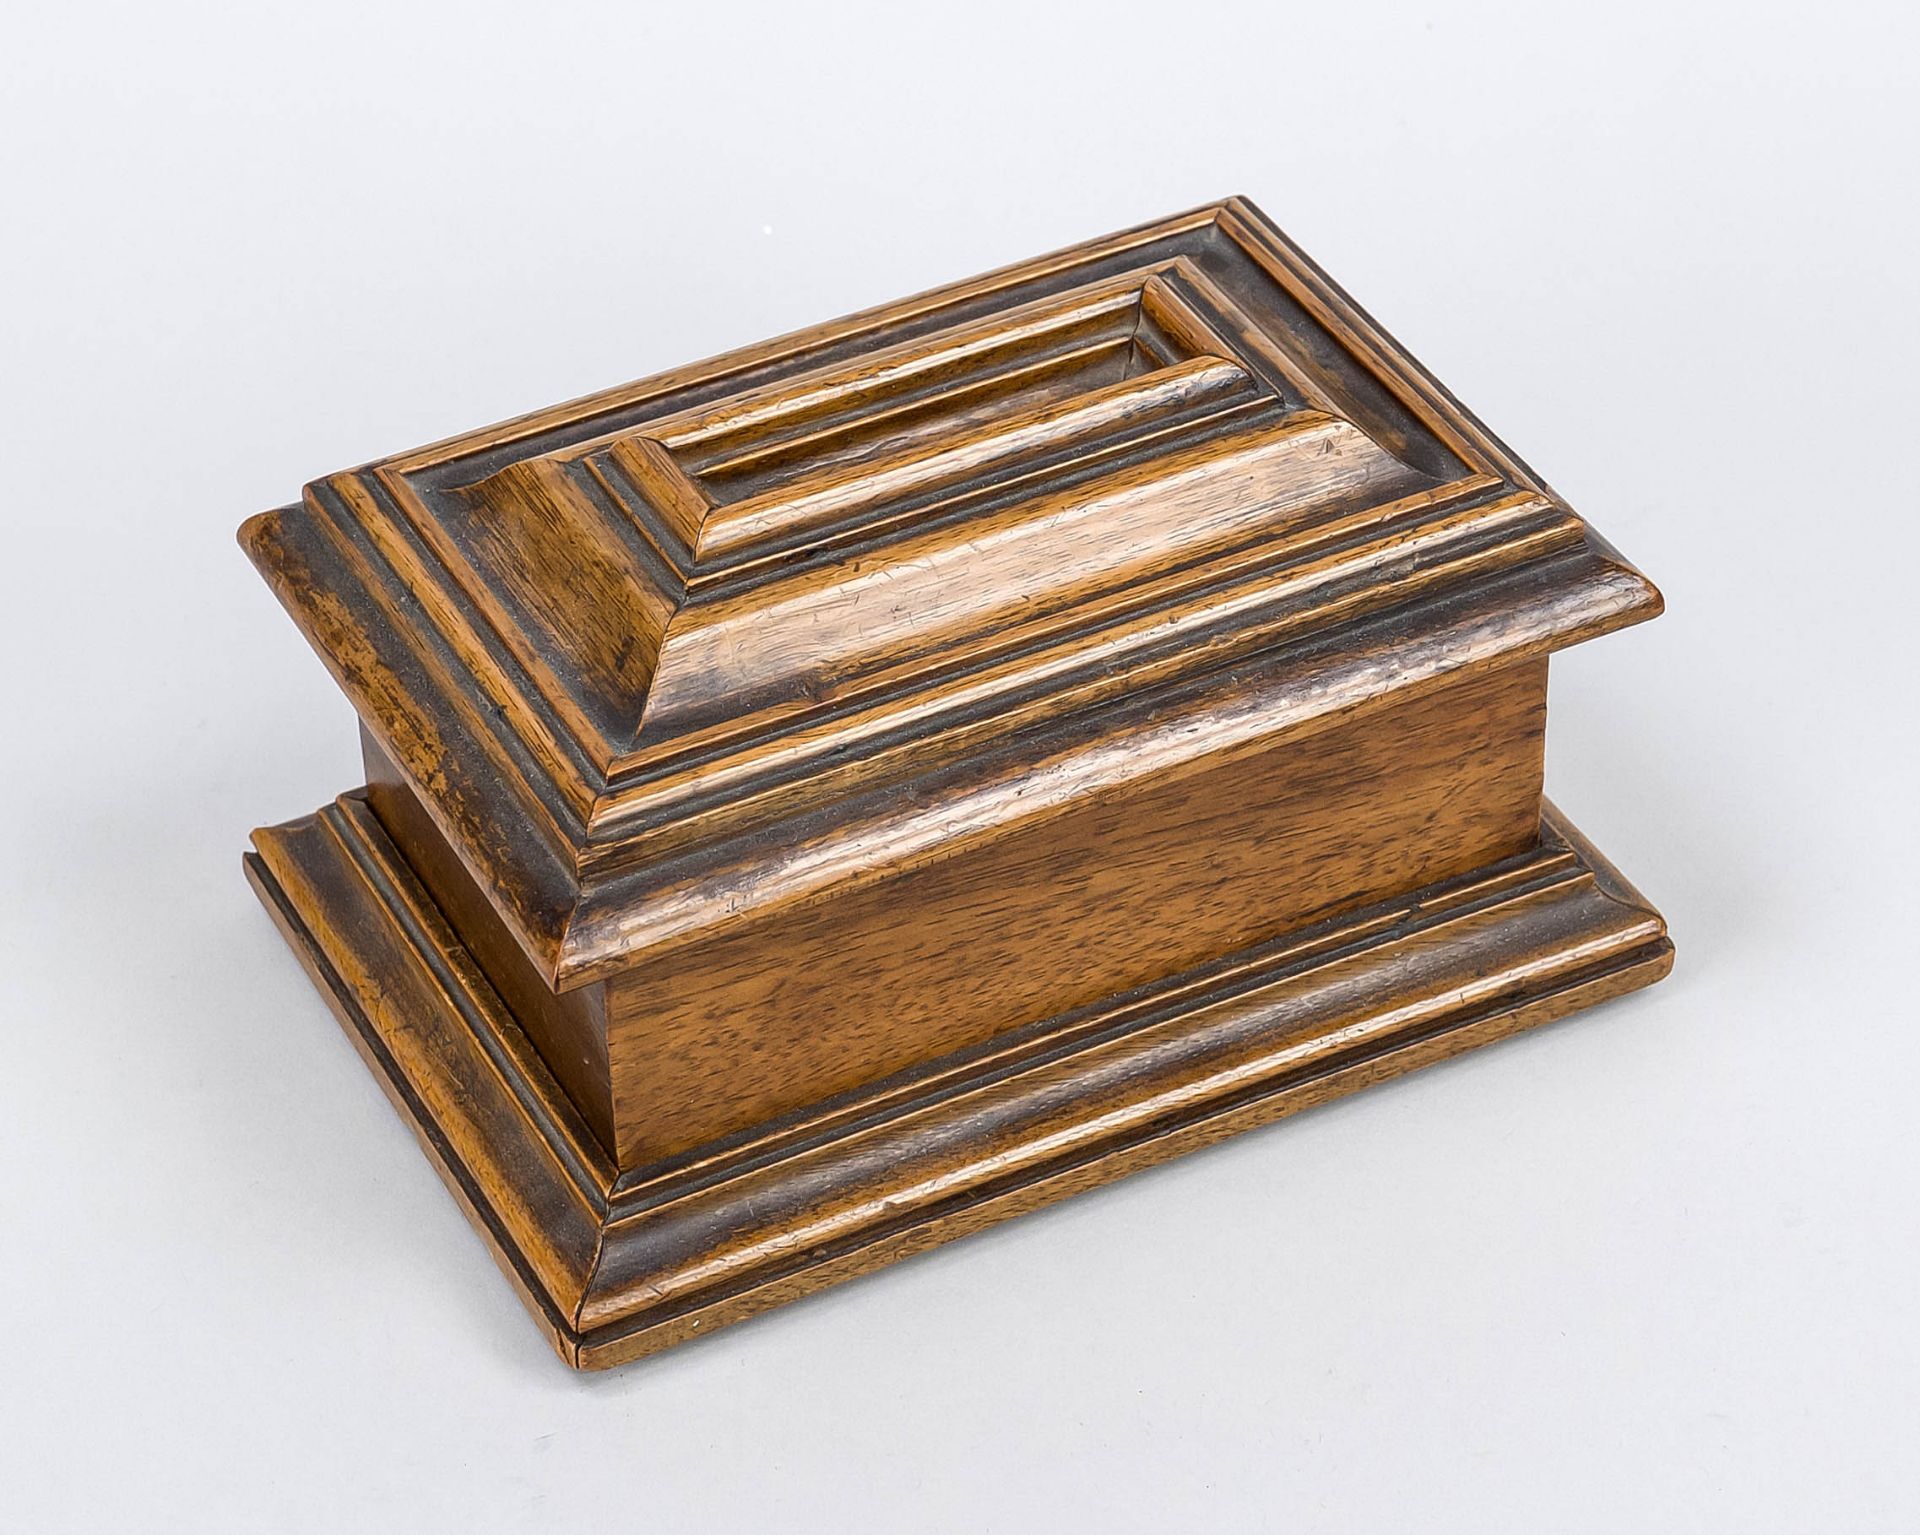 Money box in the shape of a casket, 19th century, walnut, l. 20 cm